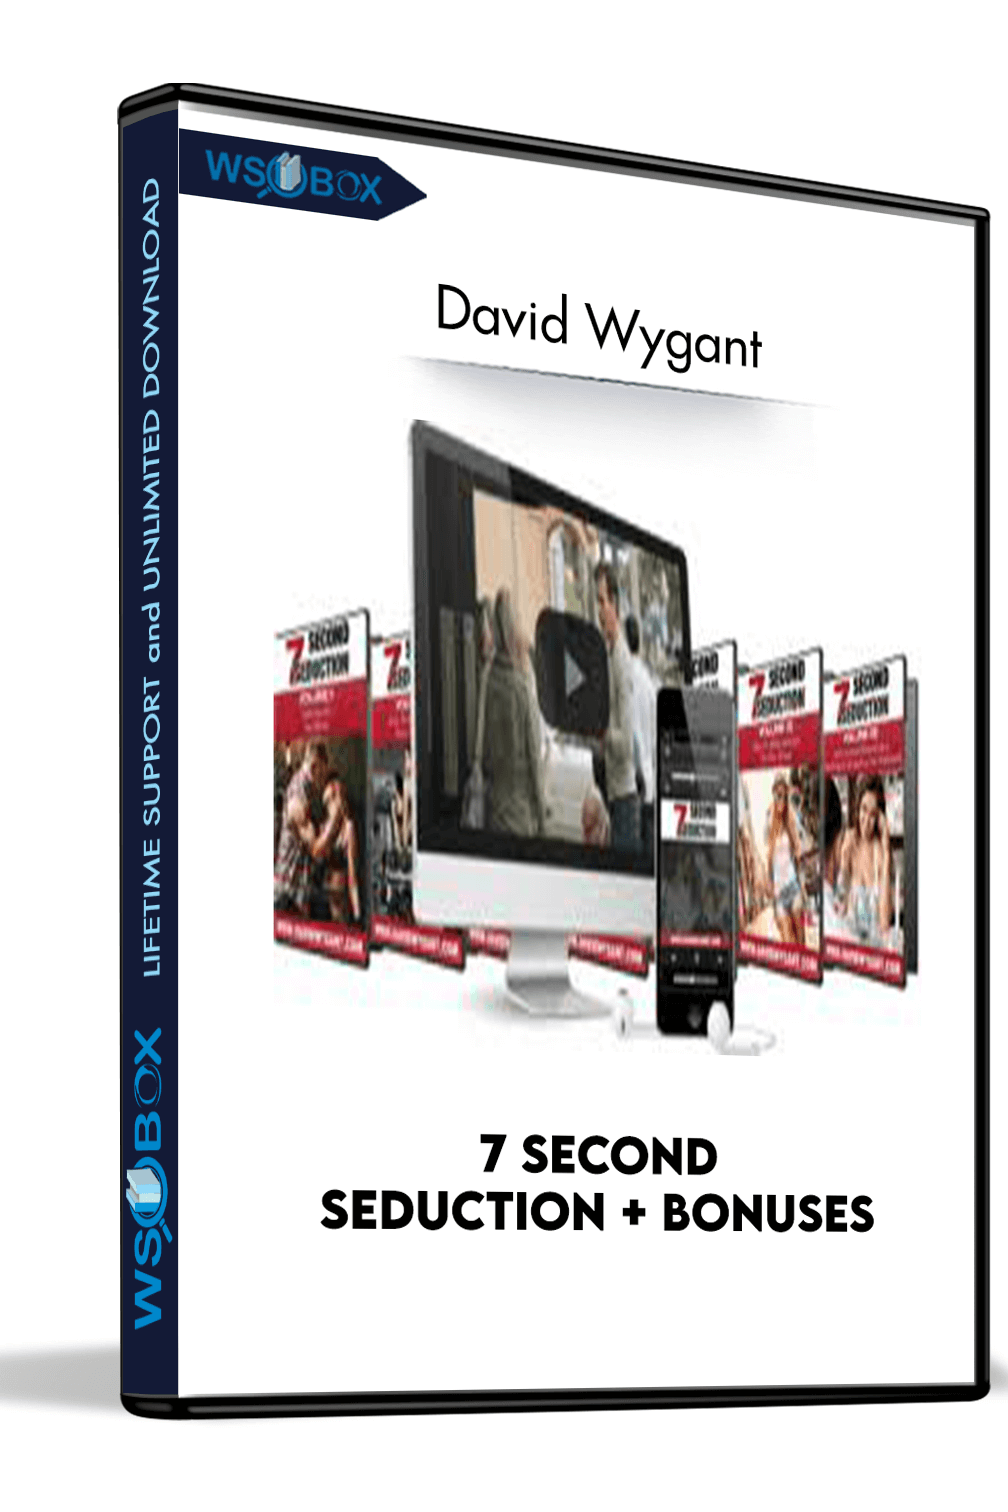 7 Second Seduction and Bonuses - David Wygant